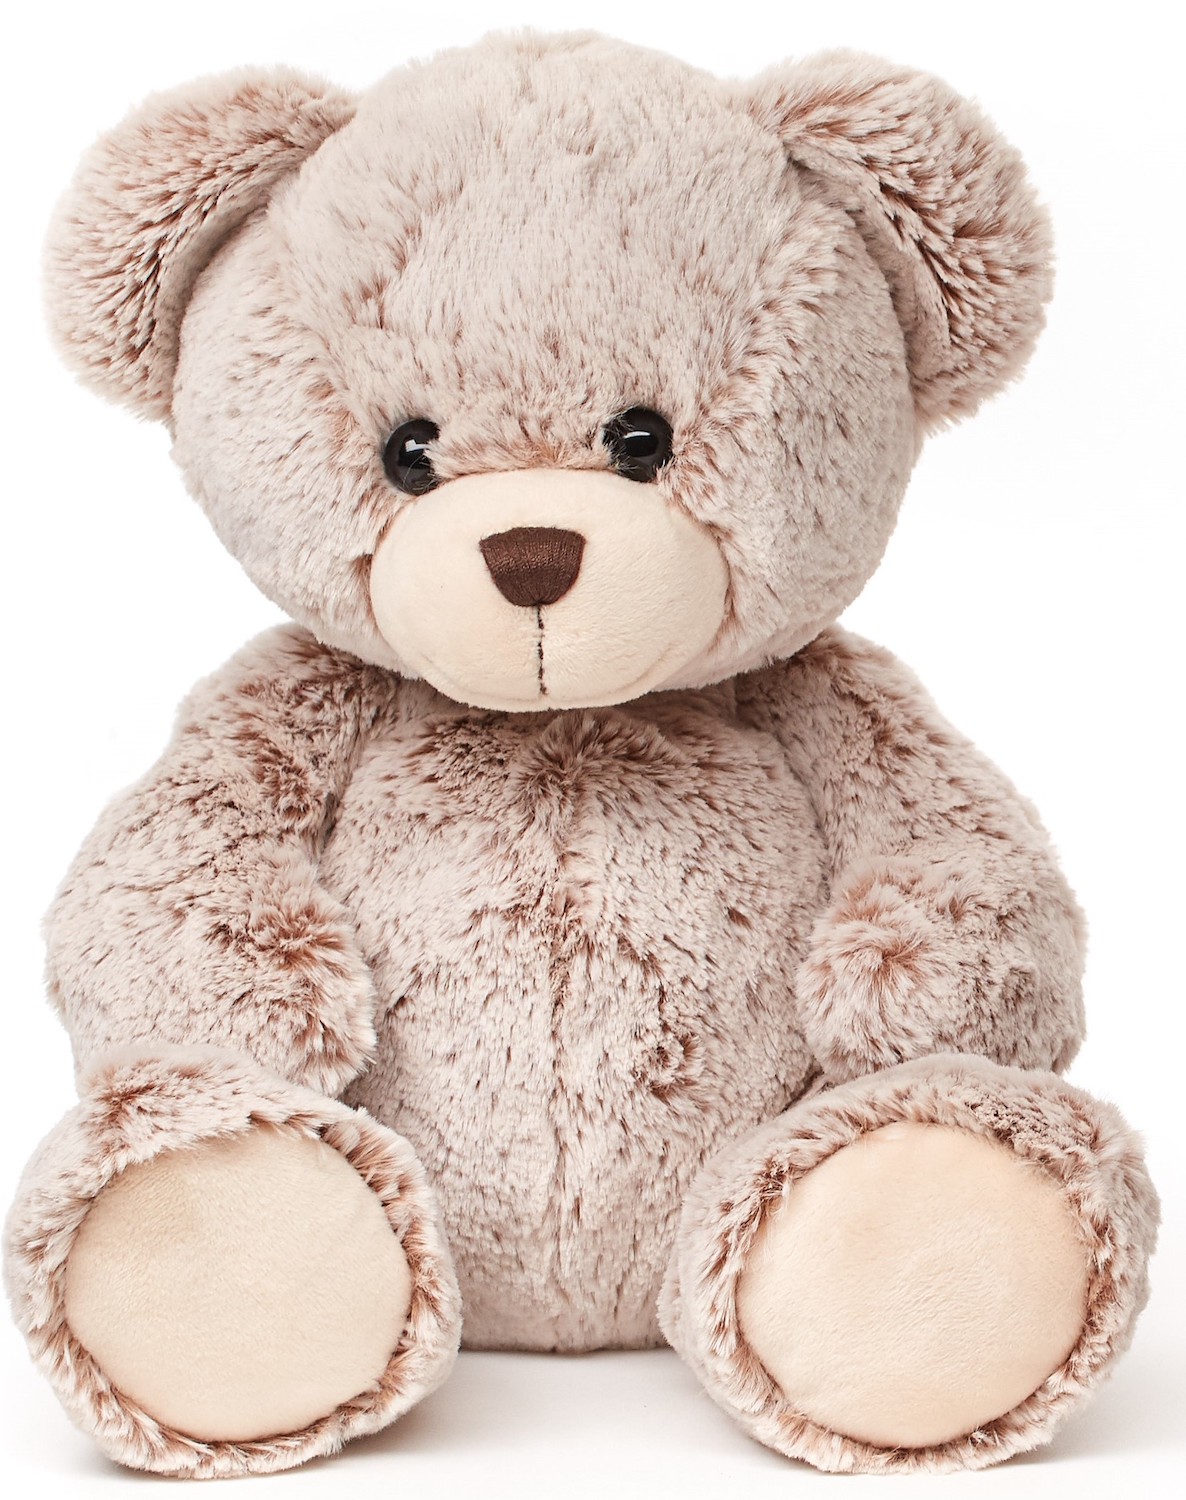 Teddy Super Soft (light brown) - 24 cm (height ) - Teddy Bear  - Stuffed Animal, Plush Toy